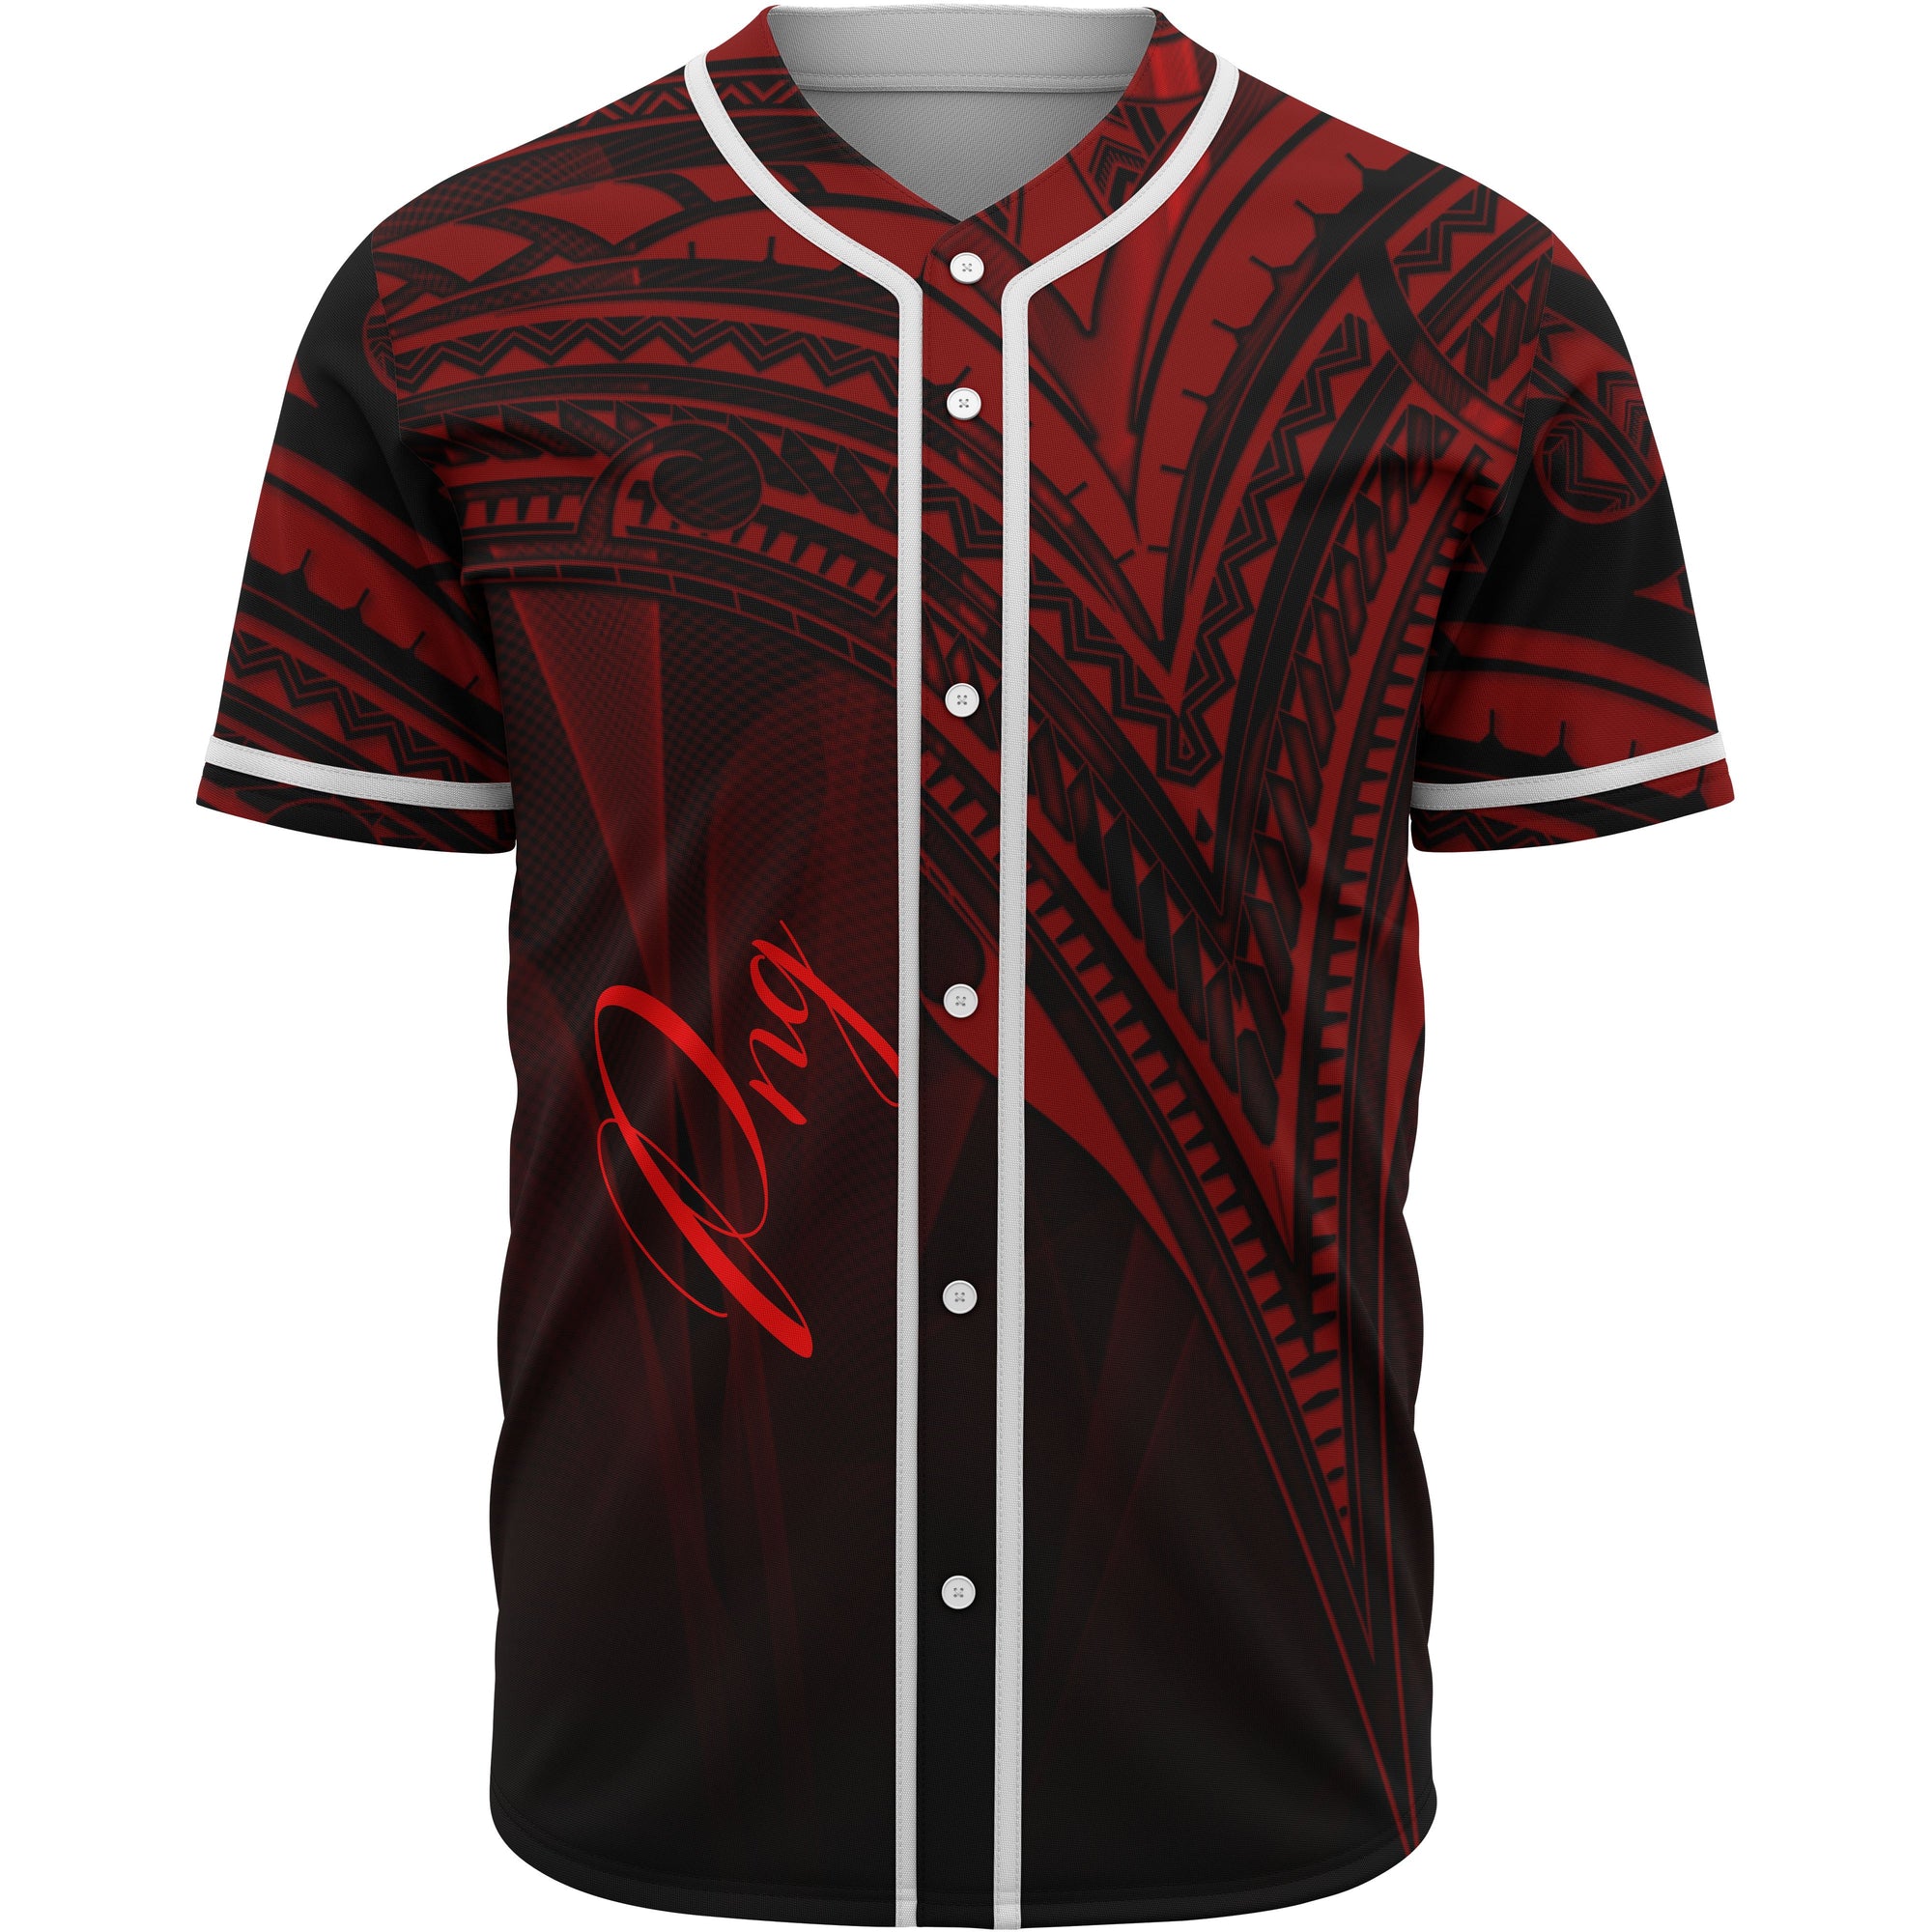 Papua New Guinea Baseball Shirt - Red Color Cross Style Unisex Black - Polynesian Pride